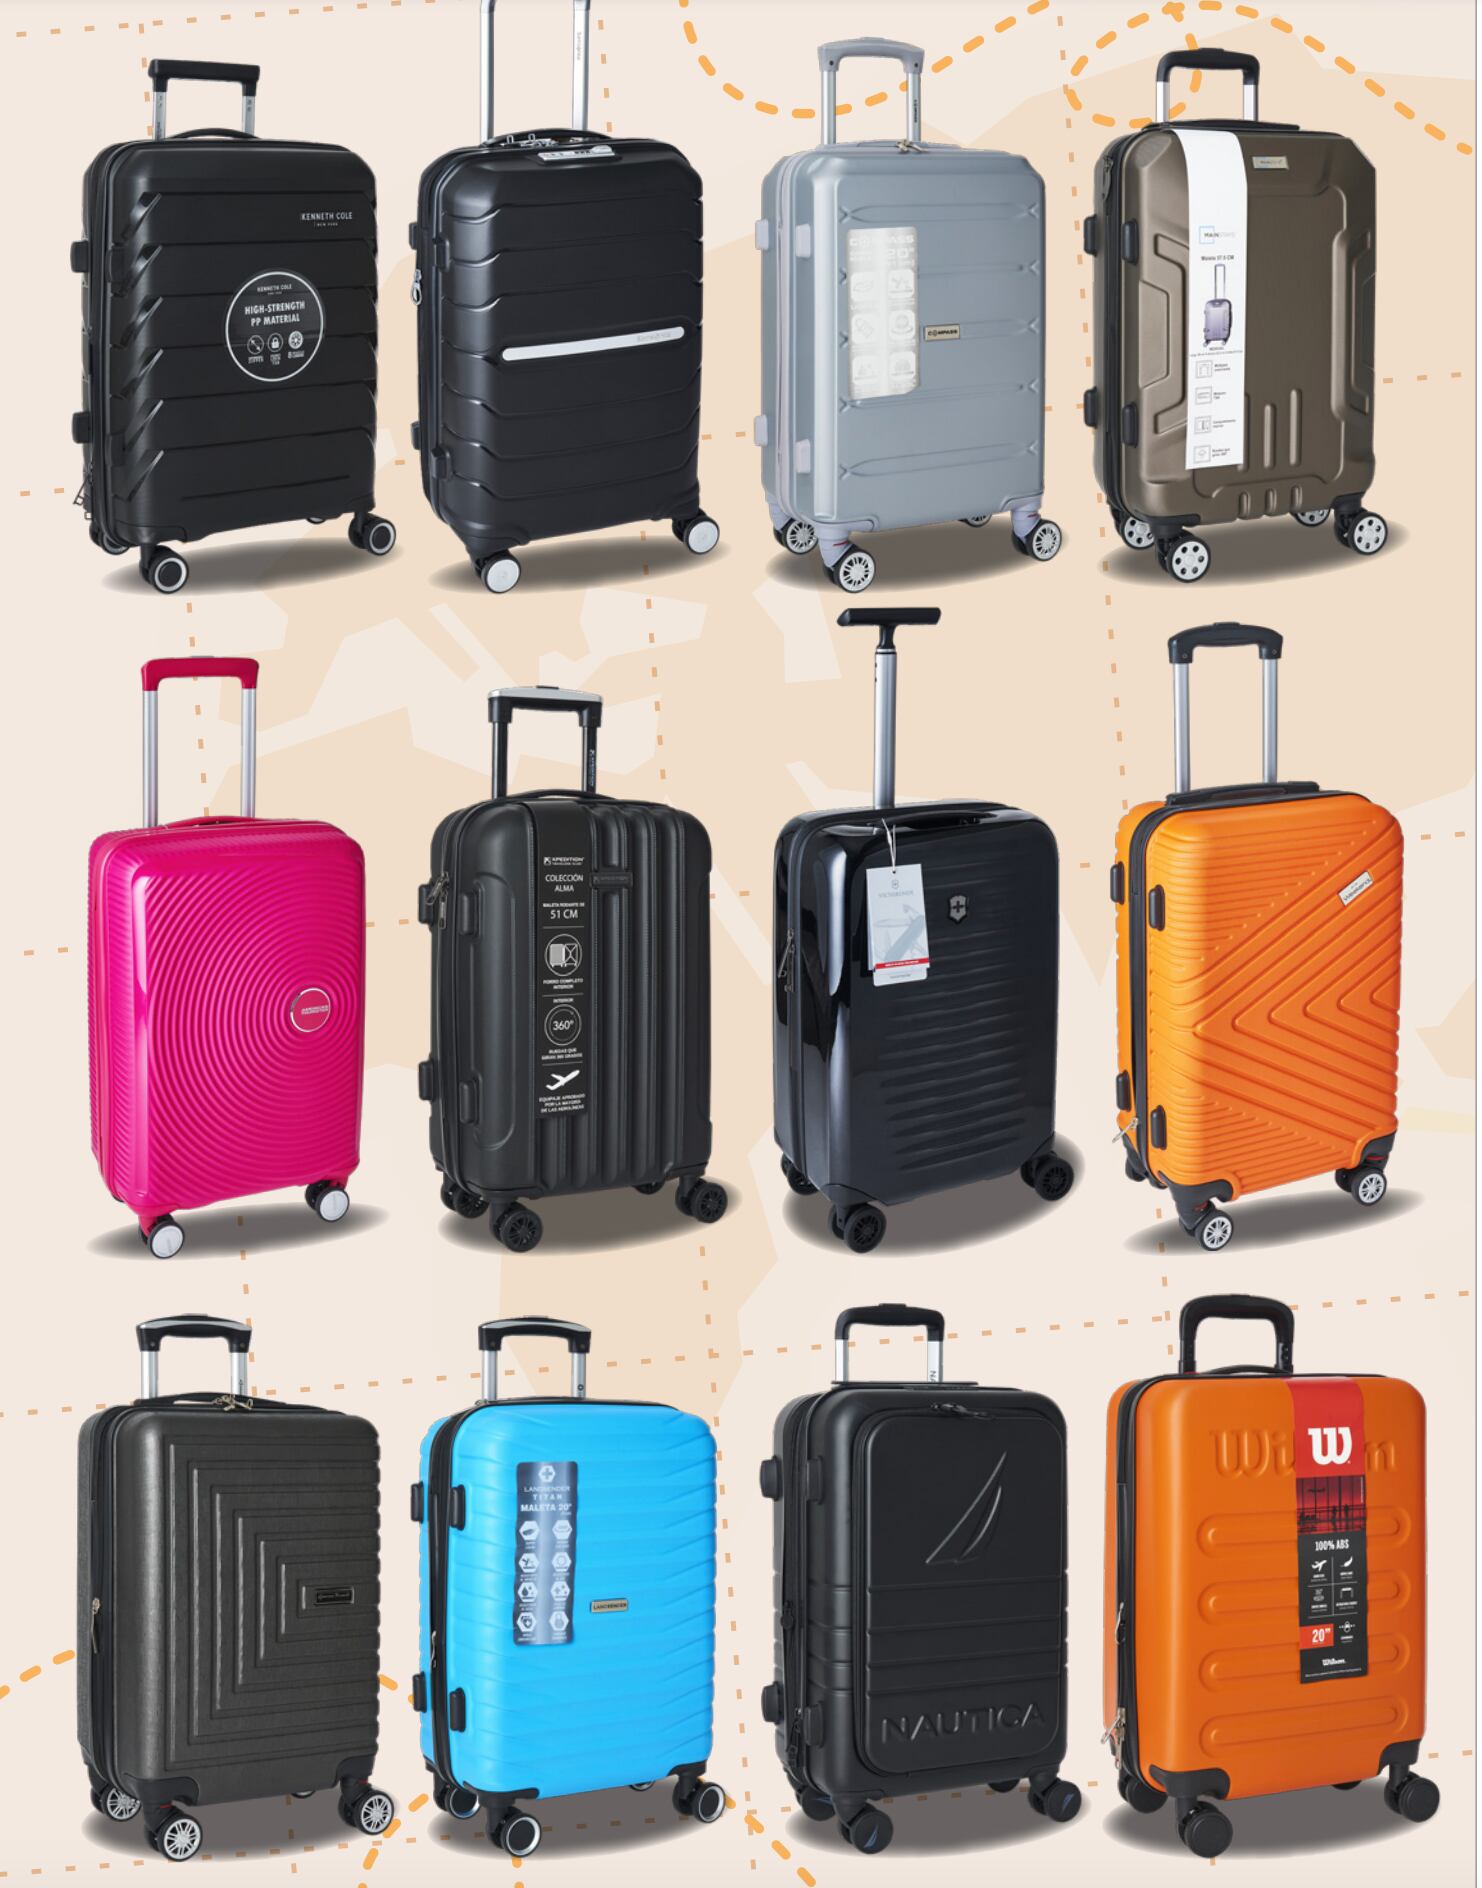 Las 5 mejores maletas de cabina según Profeco